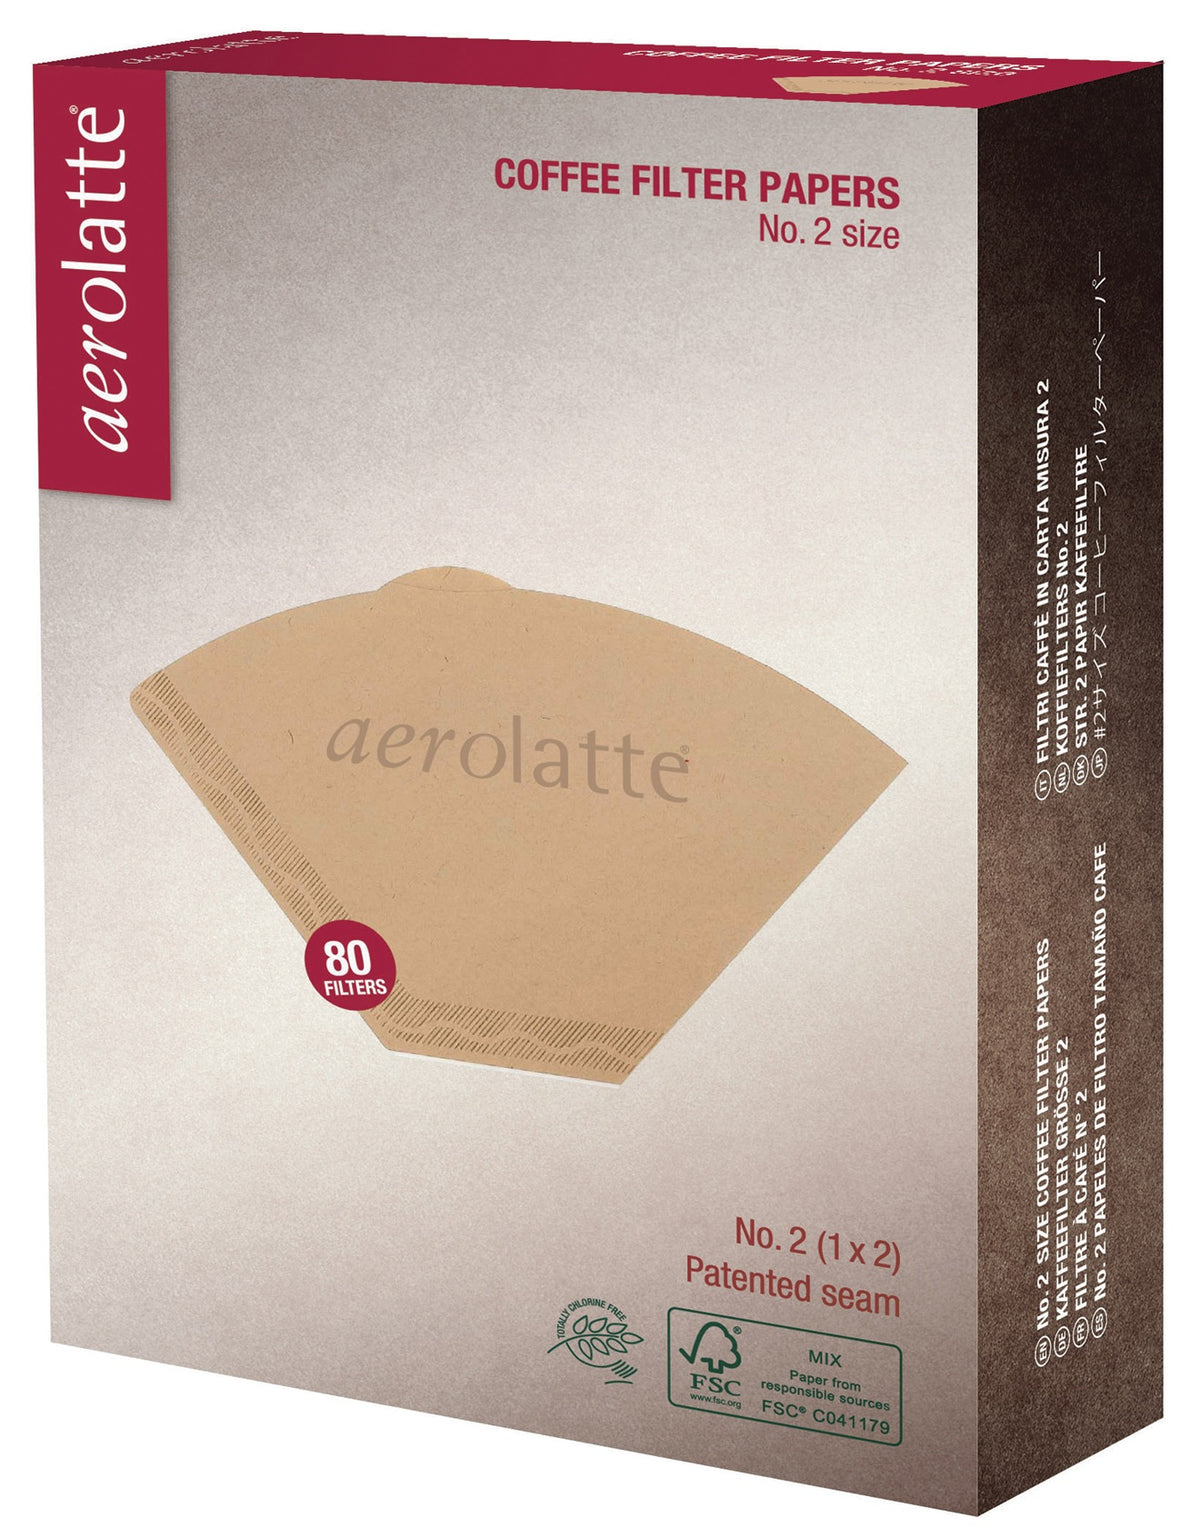 Aerolatte 0086 Unbleached Coffee Filters, #2